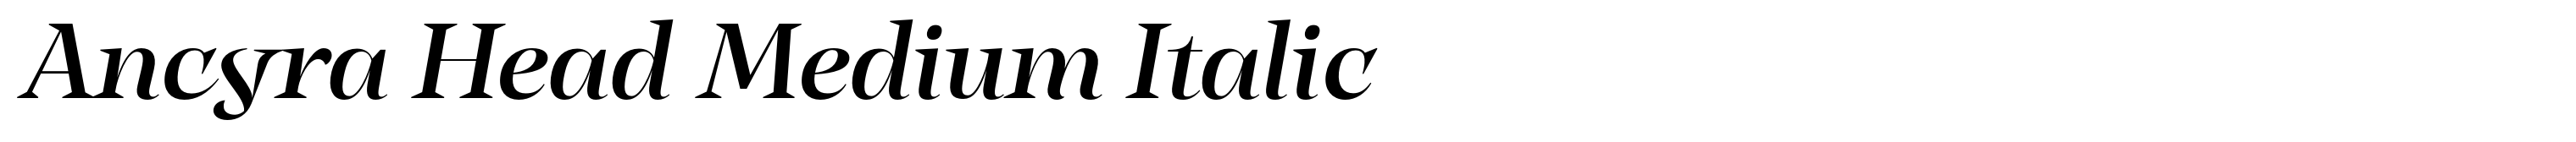 Ancyra Head Medium Italic